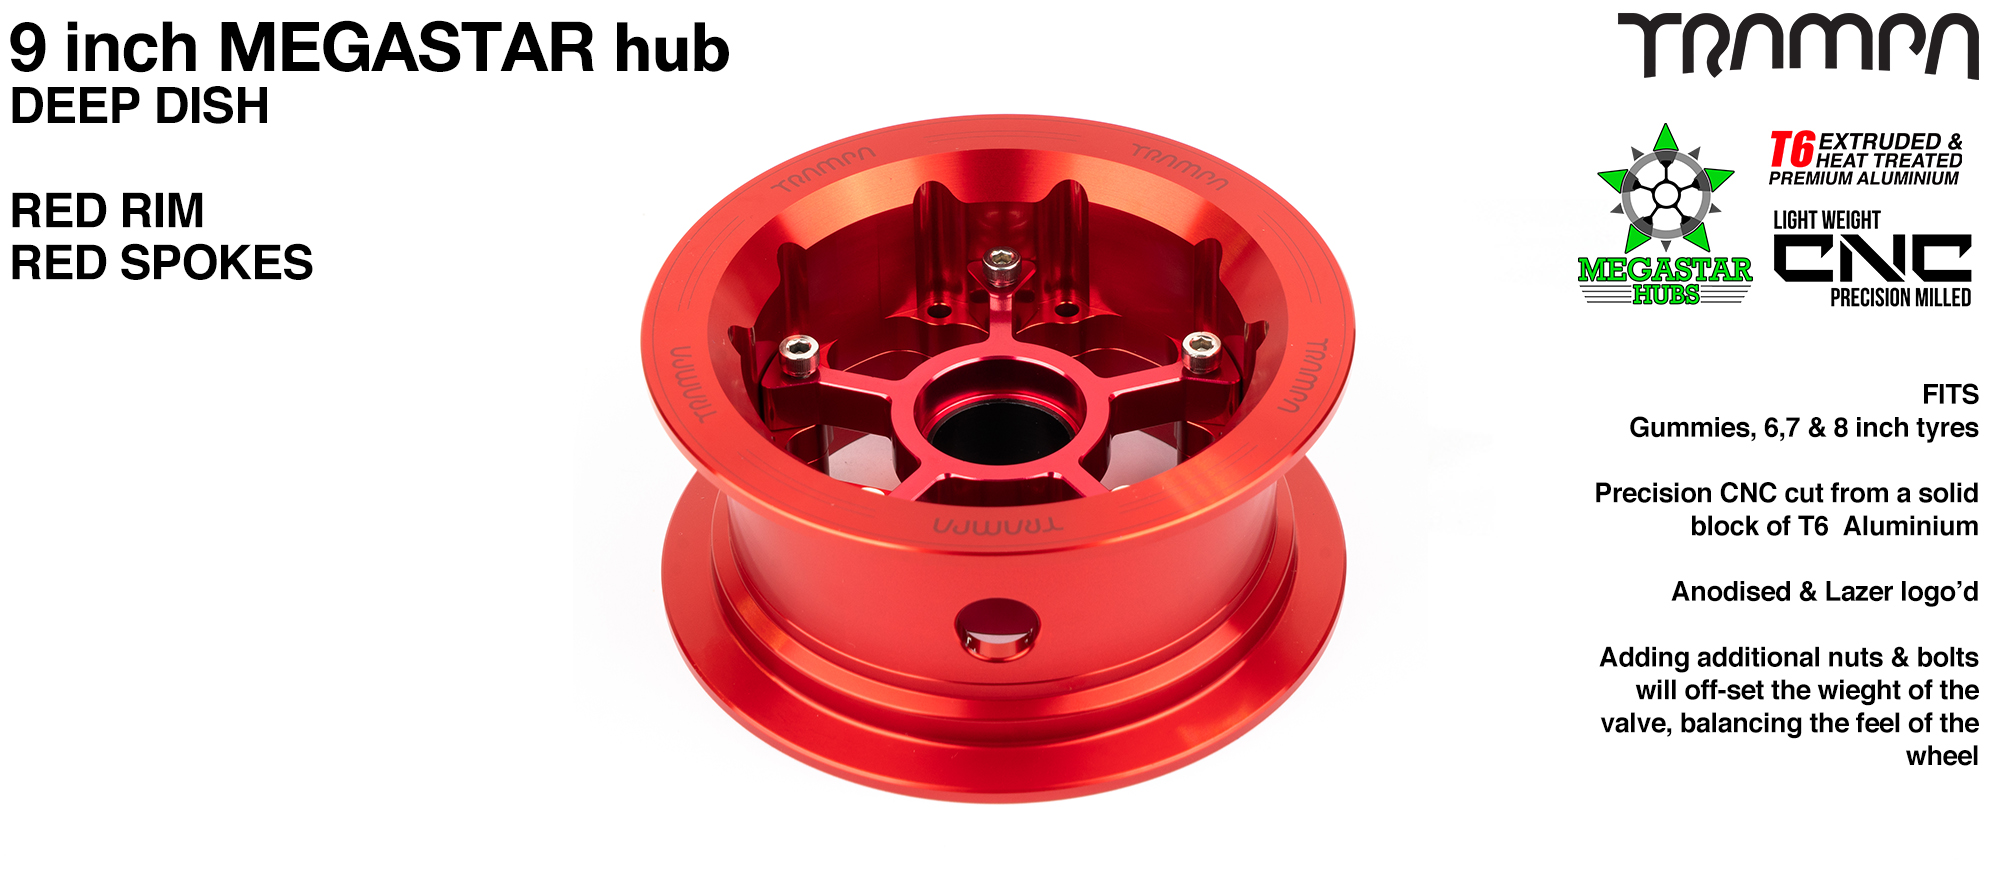 4 x 3 Inch DEEP-DISH MEGASTAR 9 Hub - RED Rim with RED Spokes